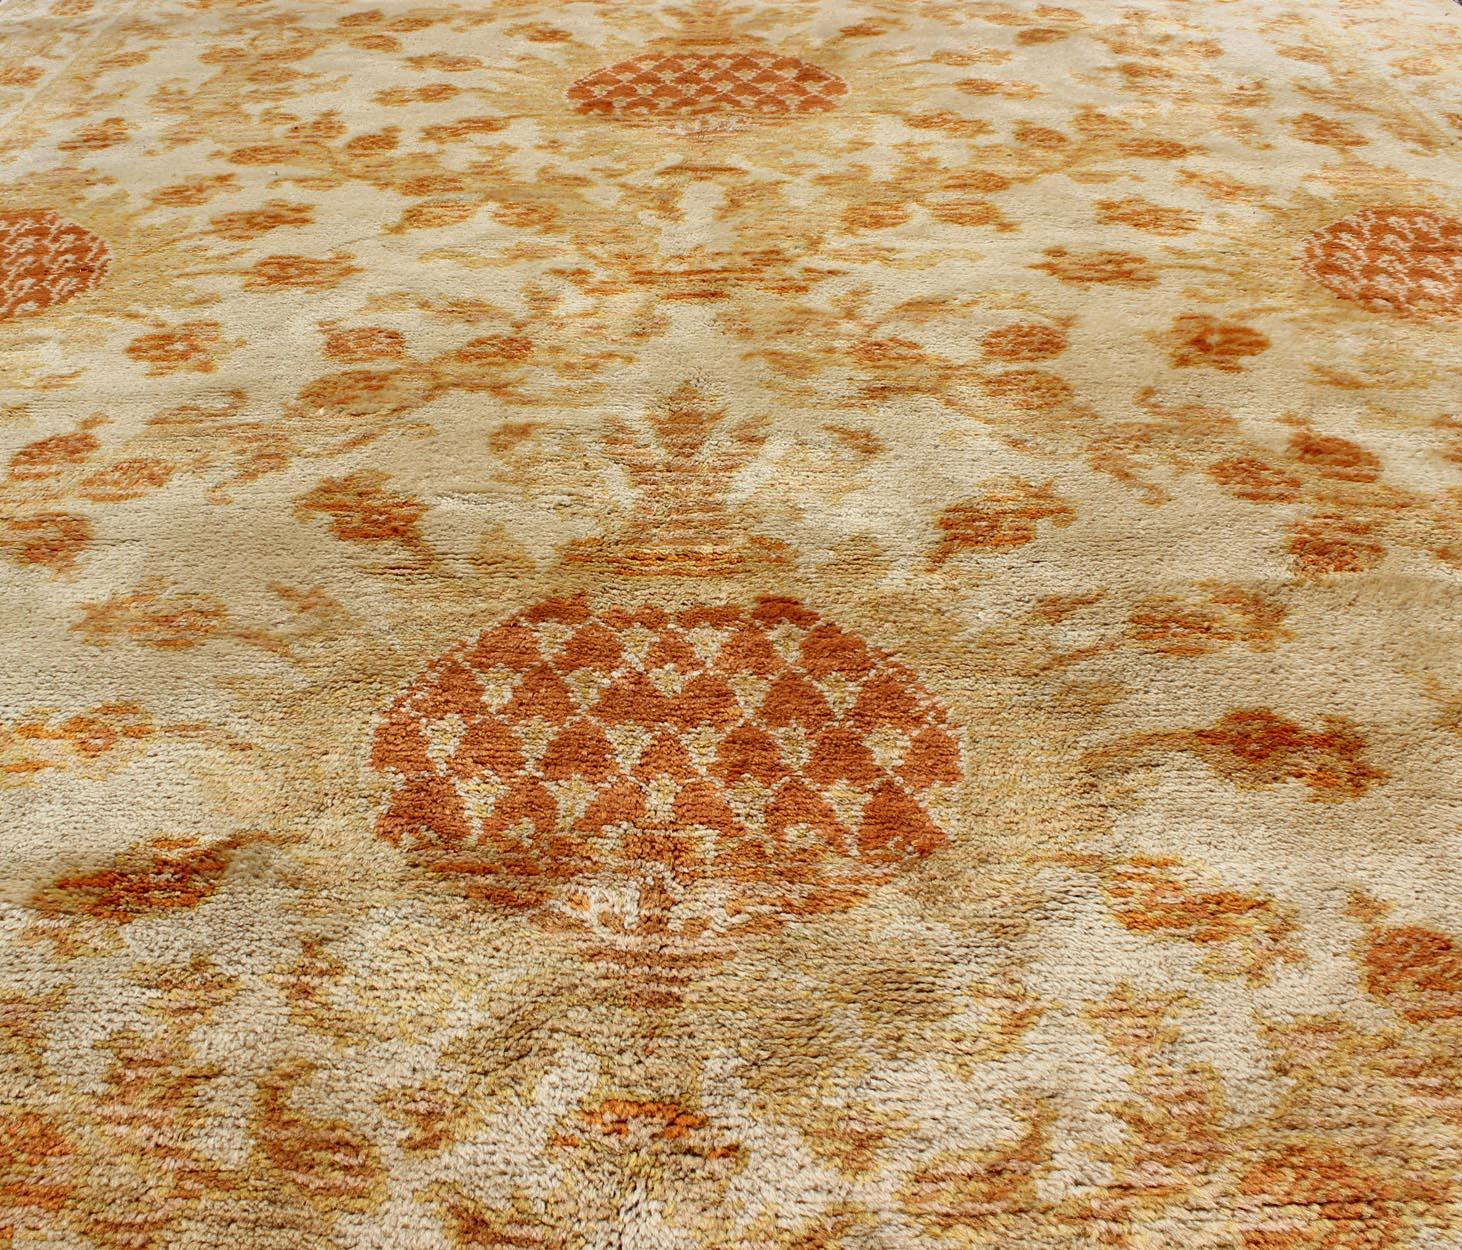 Antique Spanish European Carpet with Pineapple Design in Gold, Cream & Tangerine. Keivan Woven Arts / rug /D-0506, country of origin / type: Spain / Spanish carpet, circa Early-20th century

Measures: 9' x 12'

This unique Spanish carpet, with its